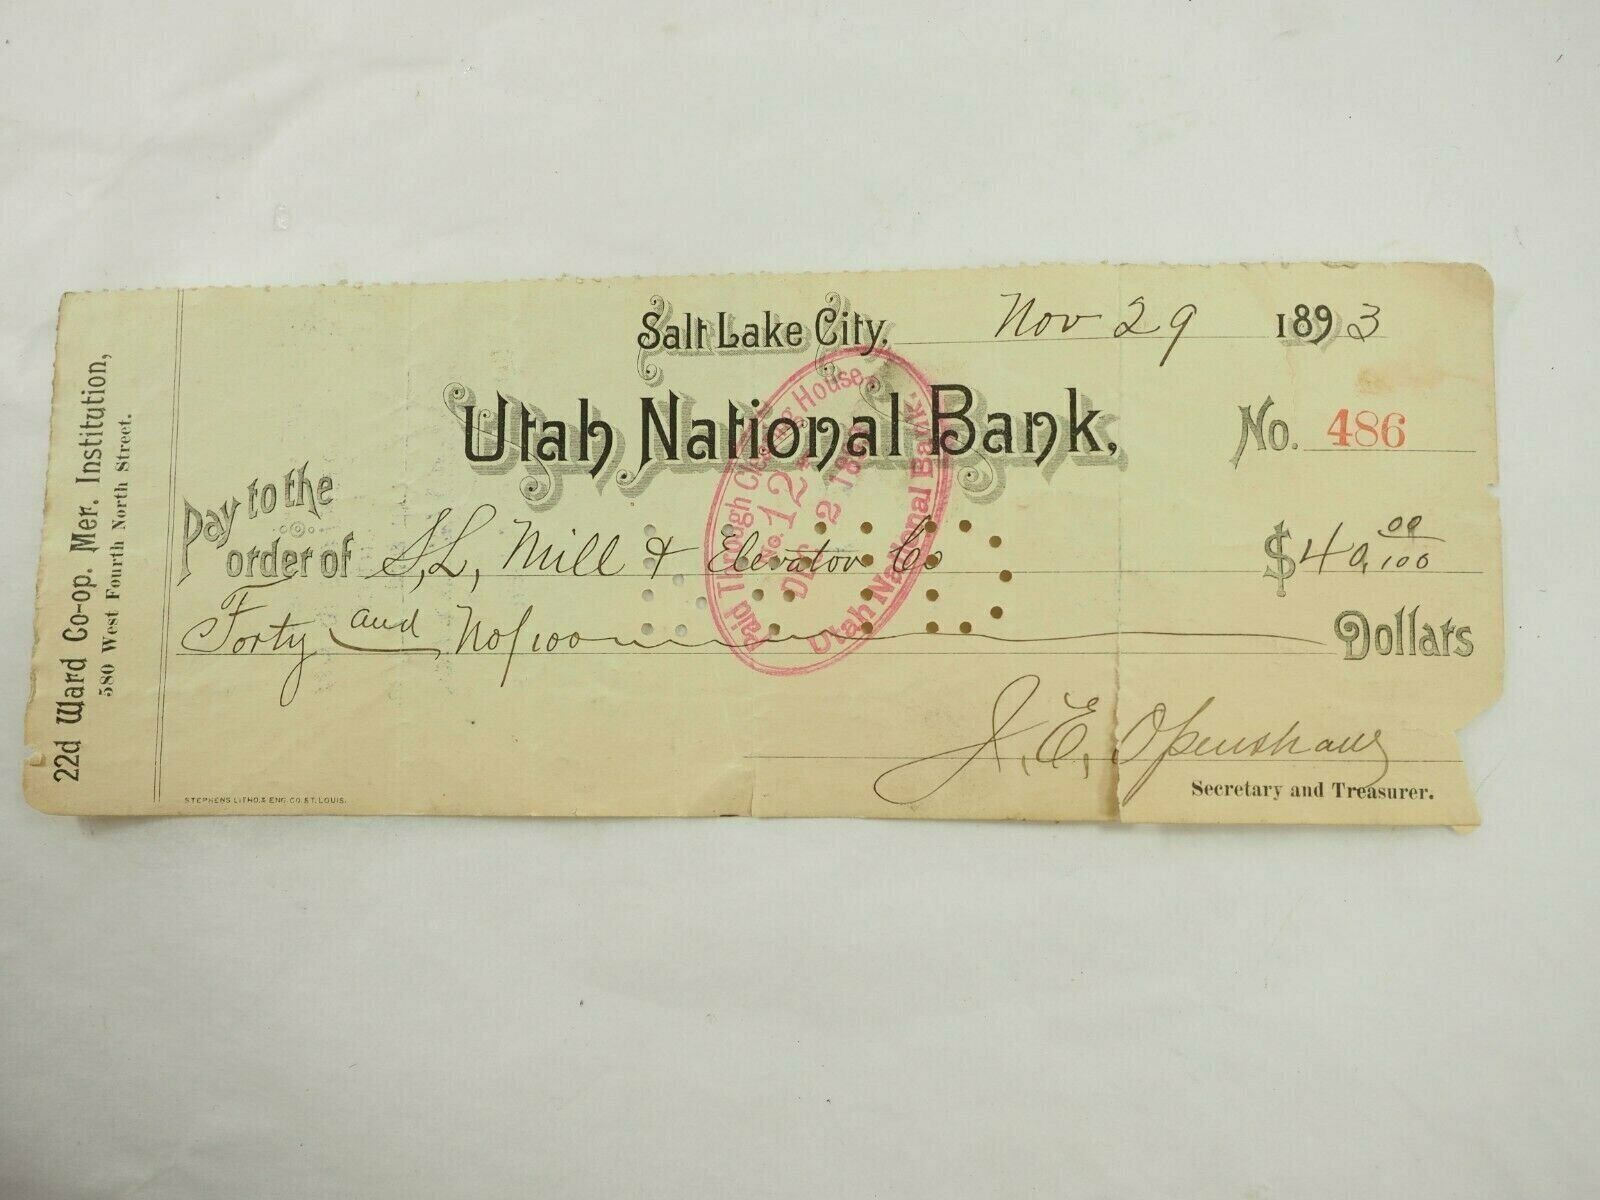 22nd Ward Co-Op to S.L. Mill Elevator Bank Draft Utah National Bank Nov.29,1893